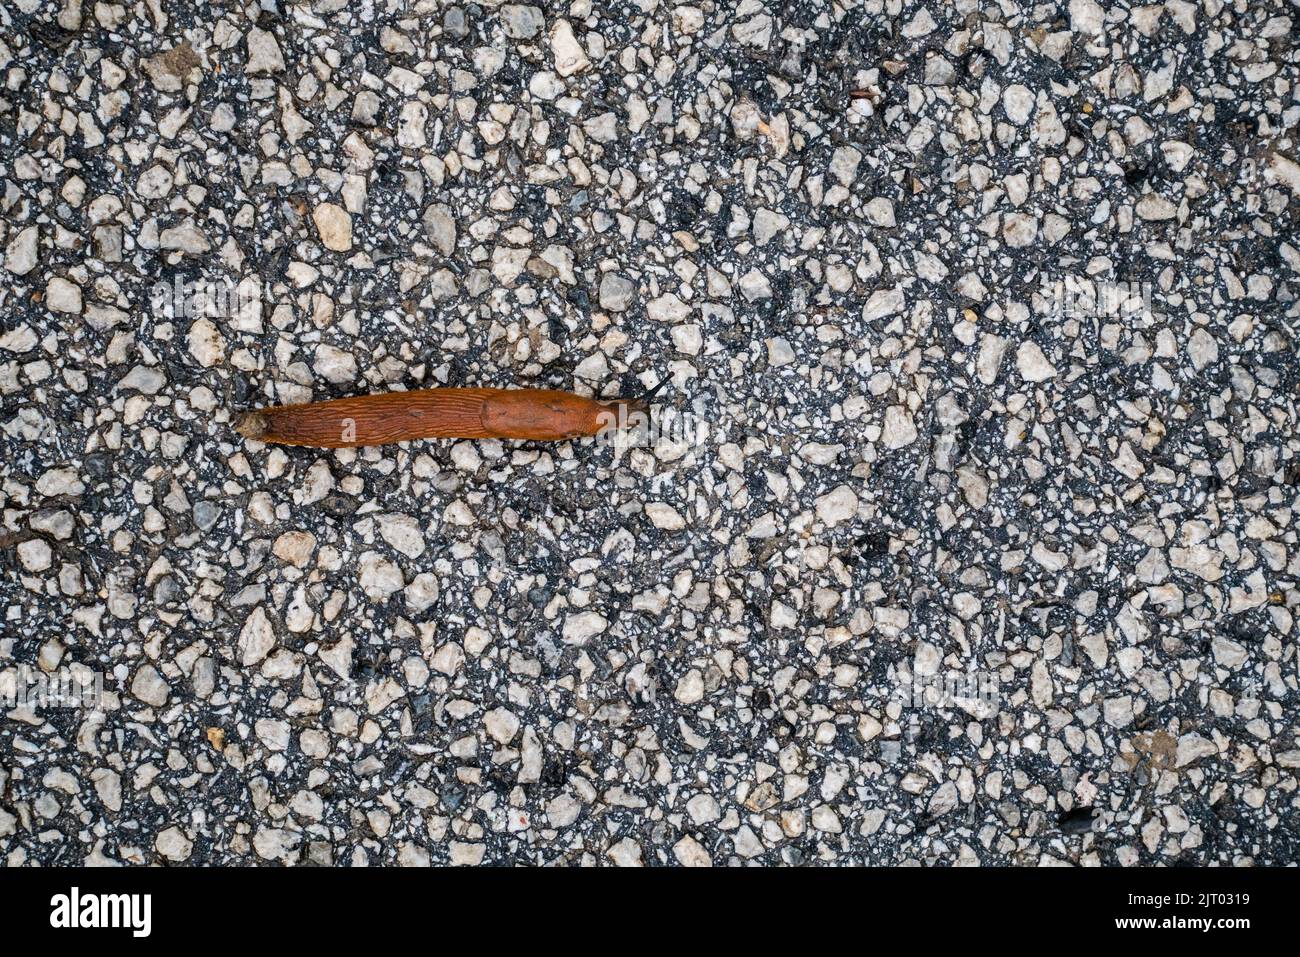 Spanish Slug (Arion lusitanicus - Arion vulgaris) or Portuguese slug as an invasive species and garden pest Stock Photo